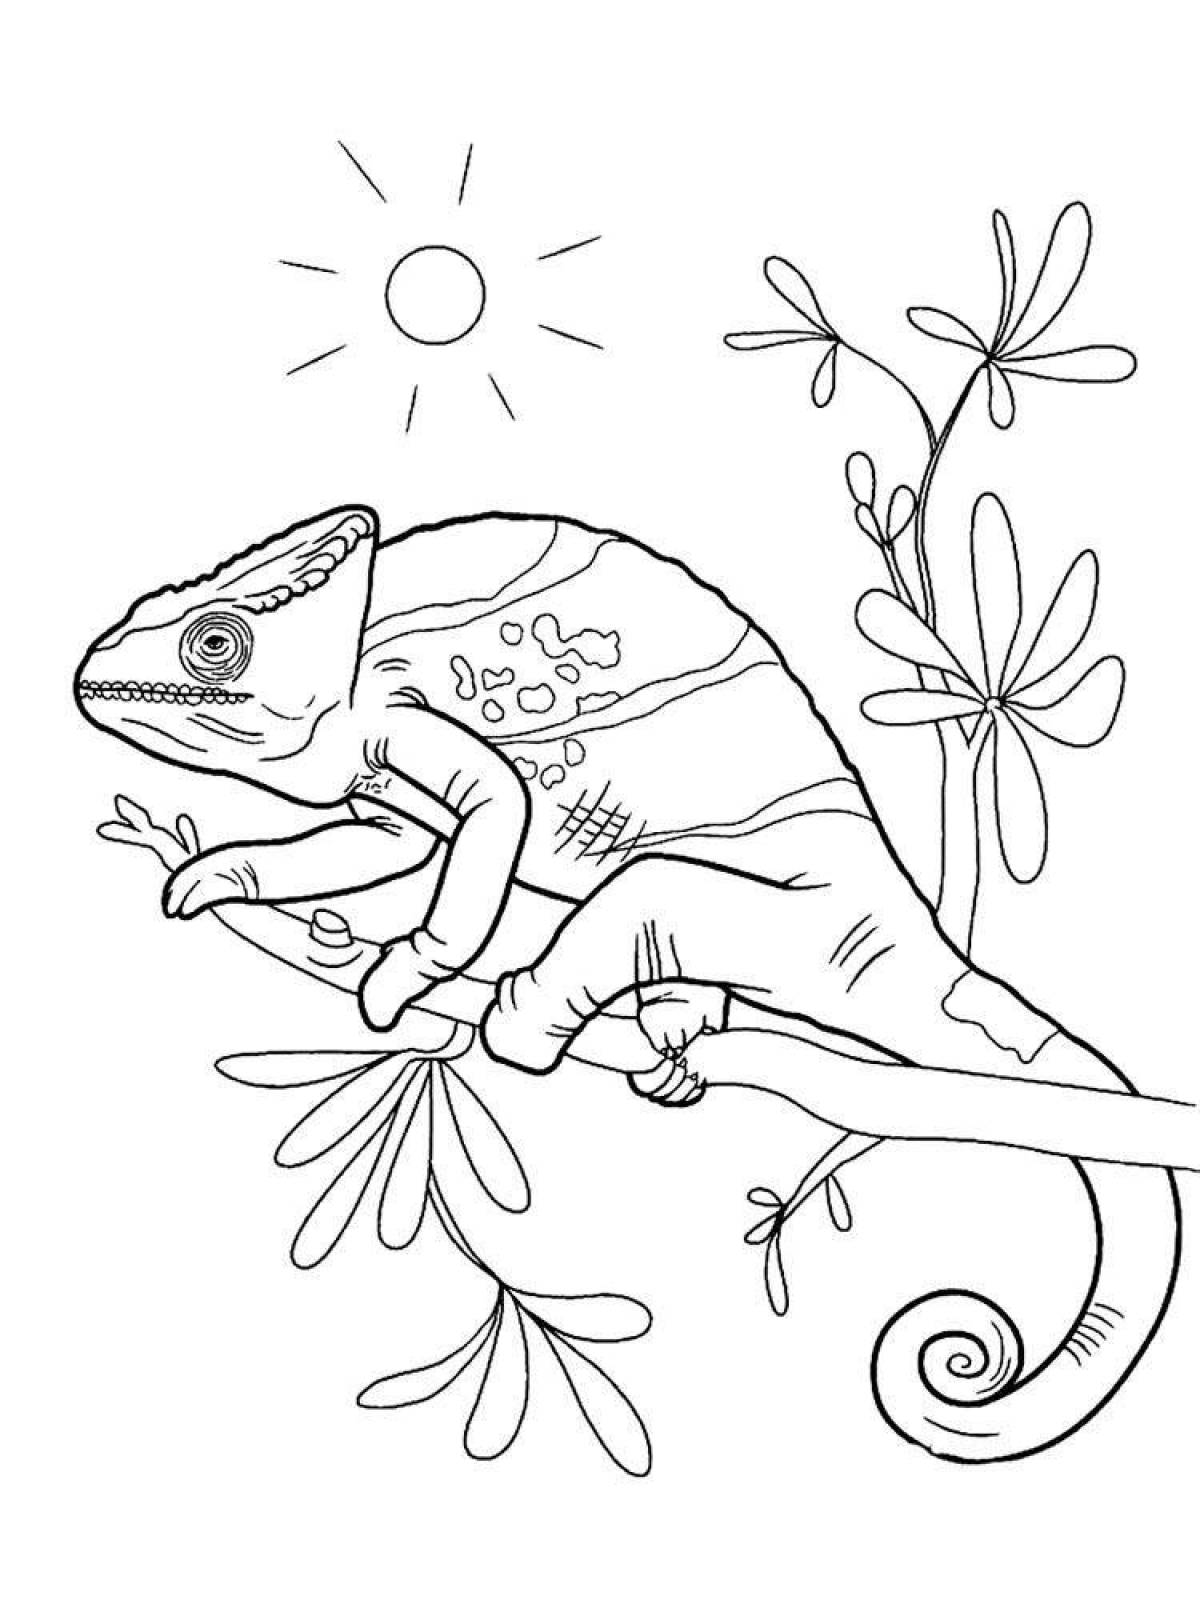 Fun coloring chameleon